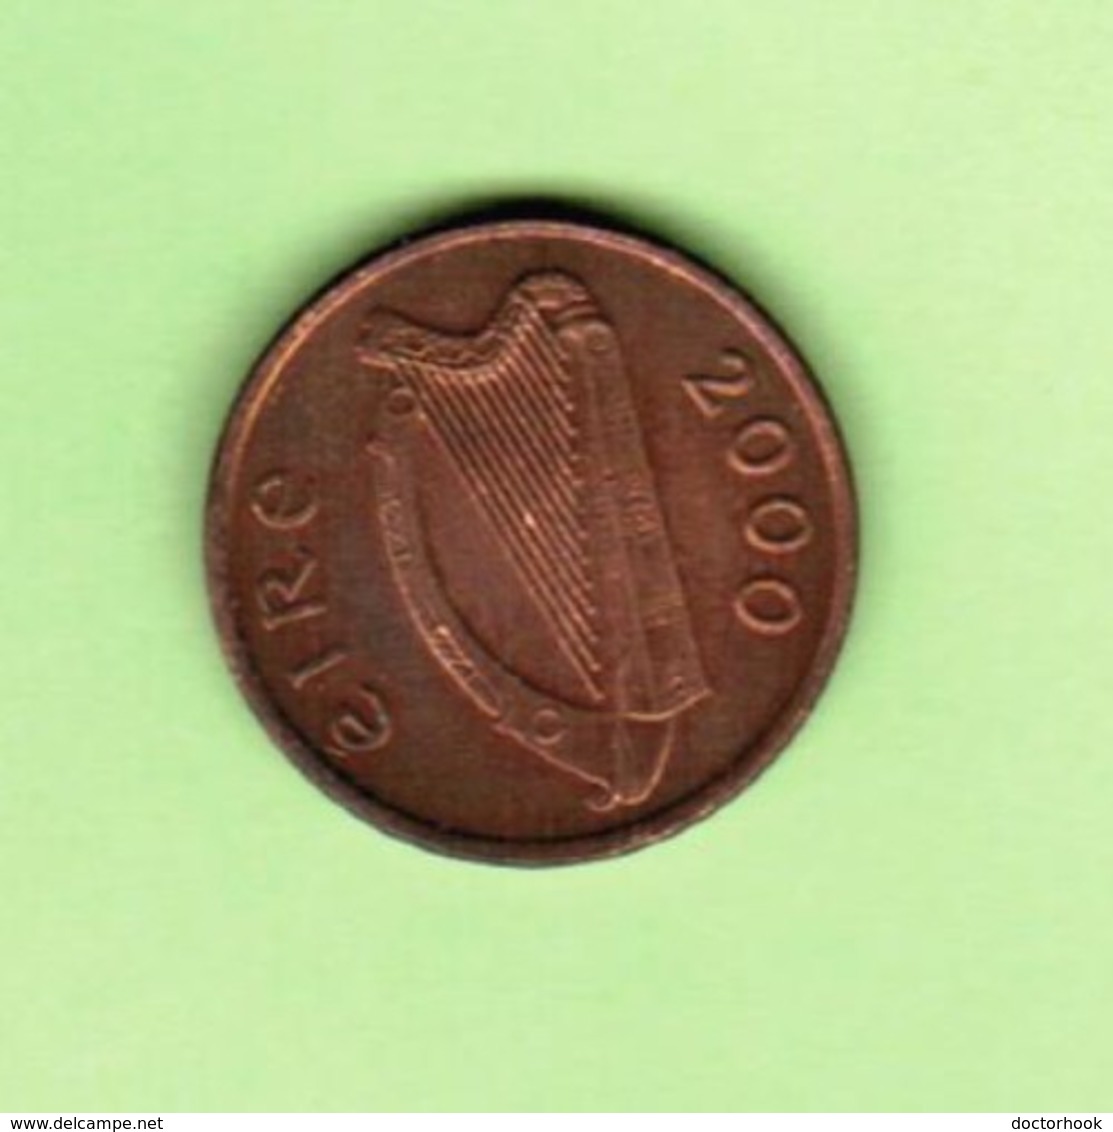 IRELAND   1 PENNY 2000  (KM # 20a) #5210 - Irland